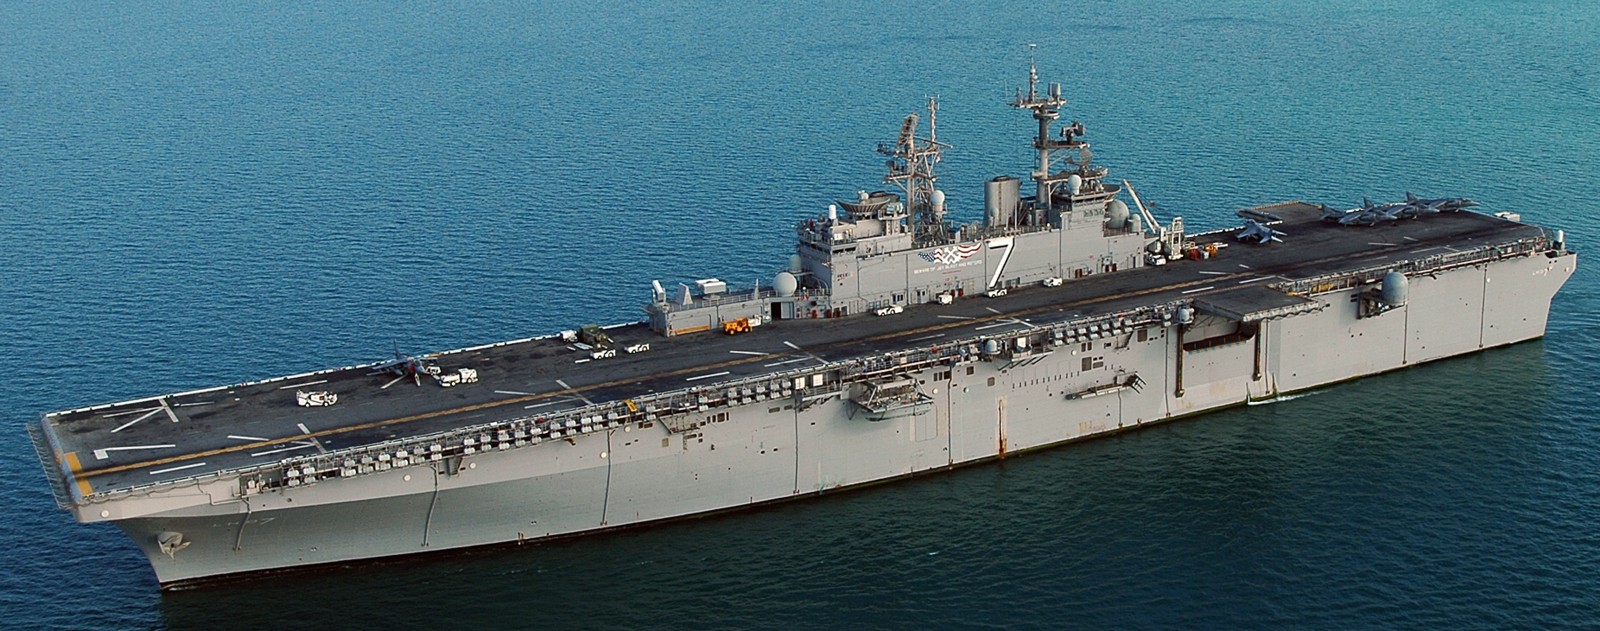 lhd-7 uss iwo jima wasp class amphibious assault ship dock landing helicopter us navy hmm-264 marines persian gulf 61